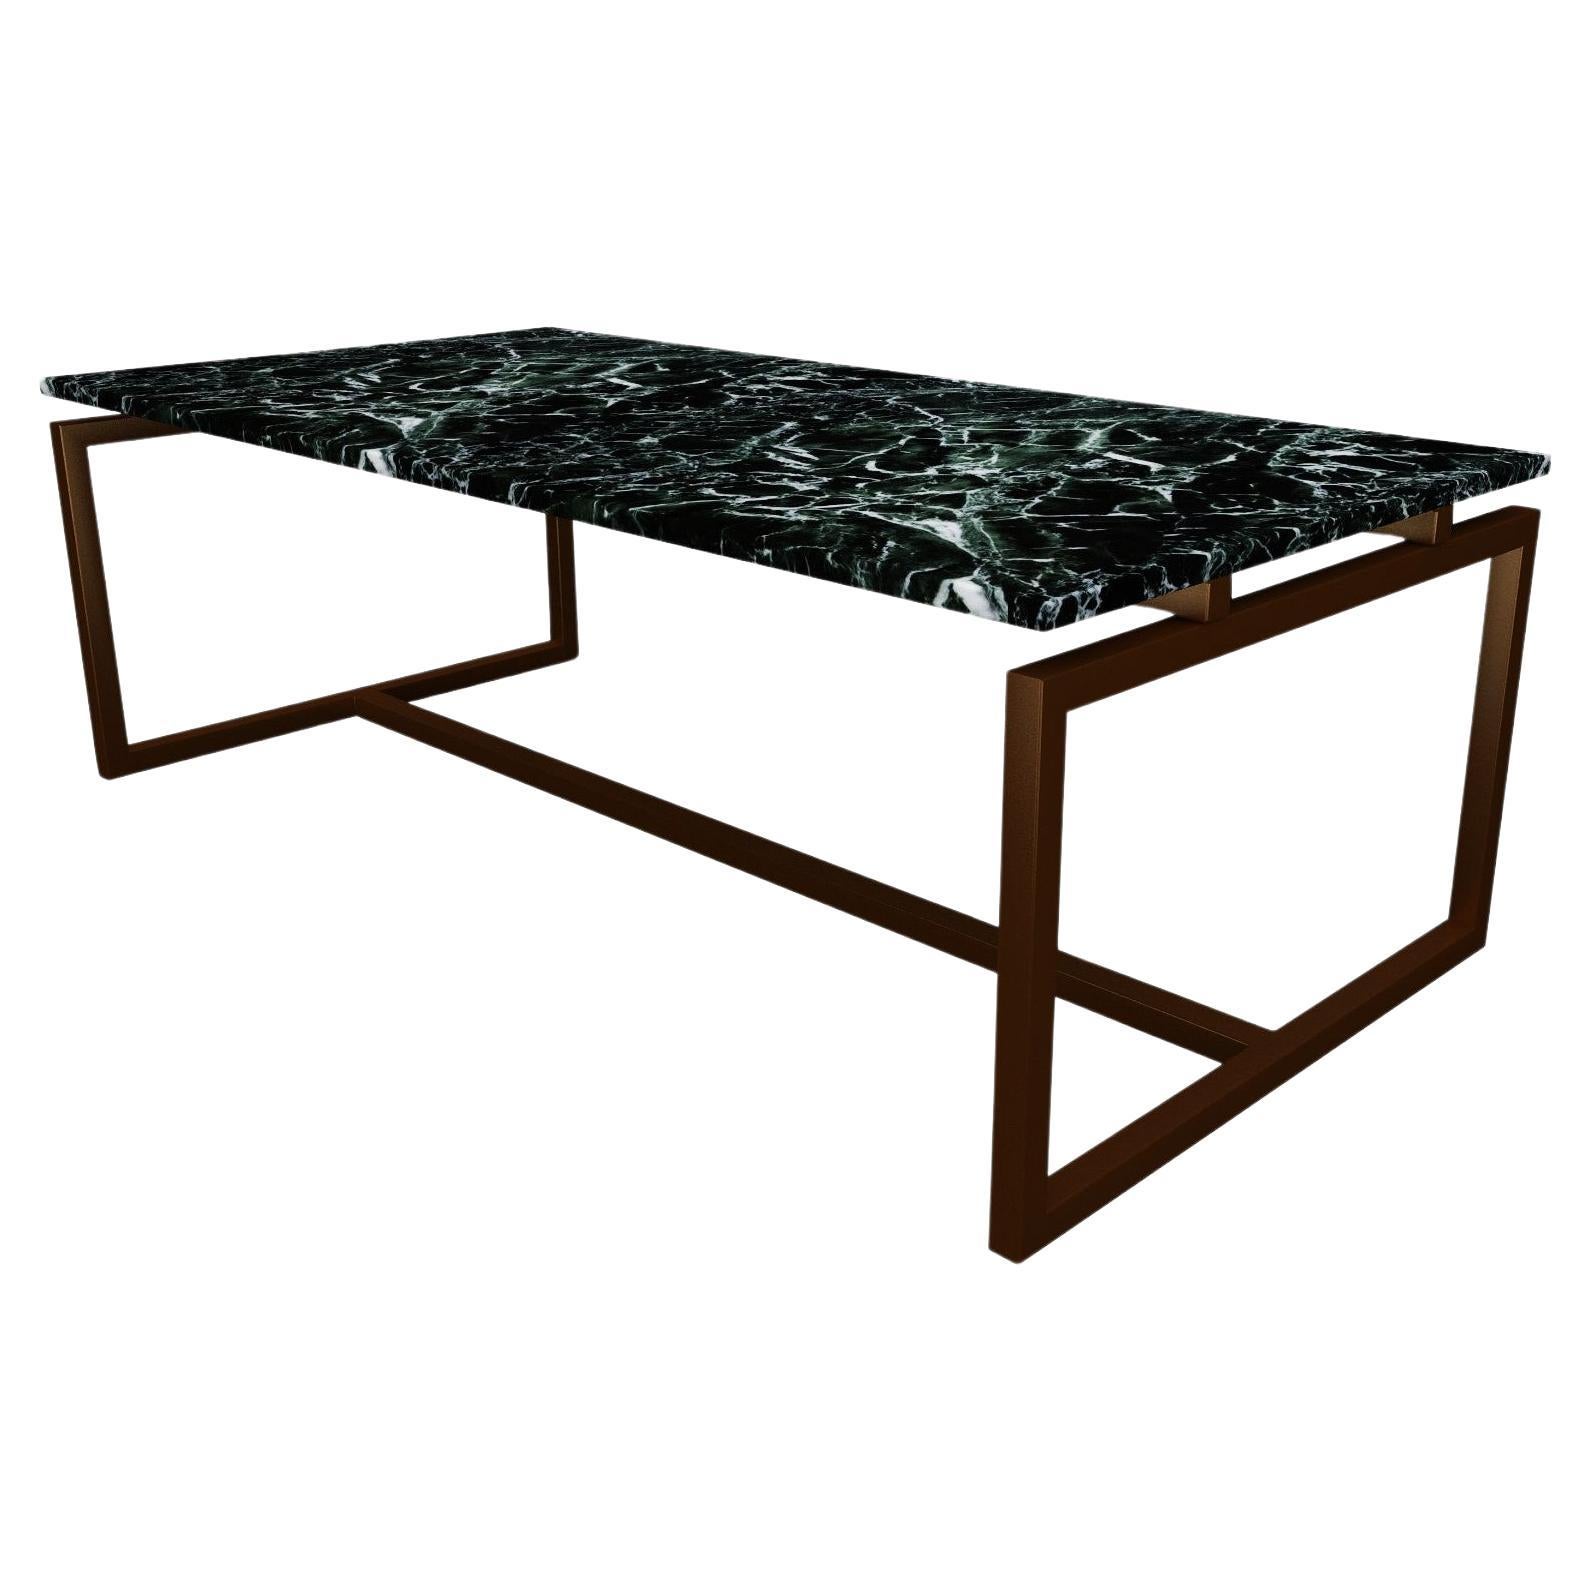 NORDST OLIVIA Coffee Table, Italian Green Lightning Marble, Danish Modern Design For Sale